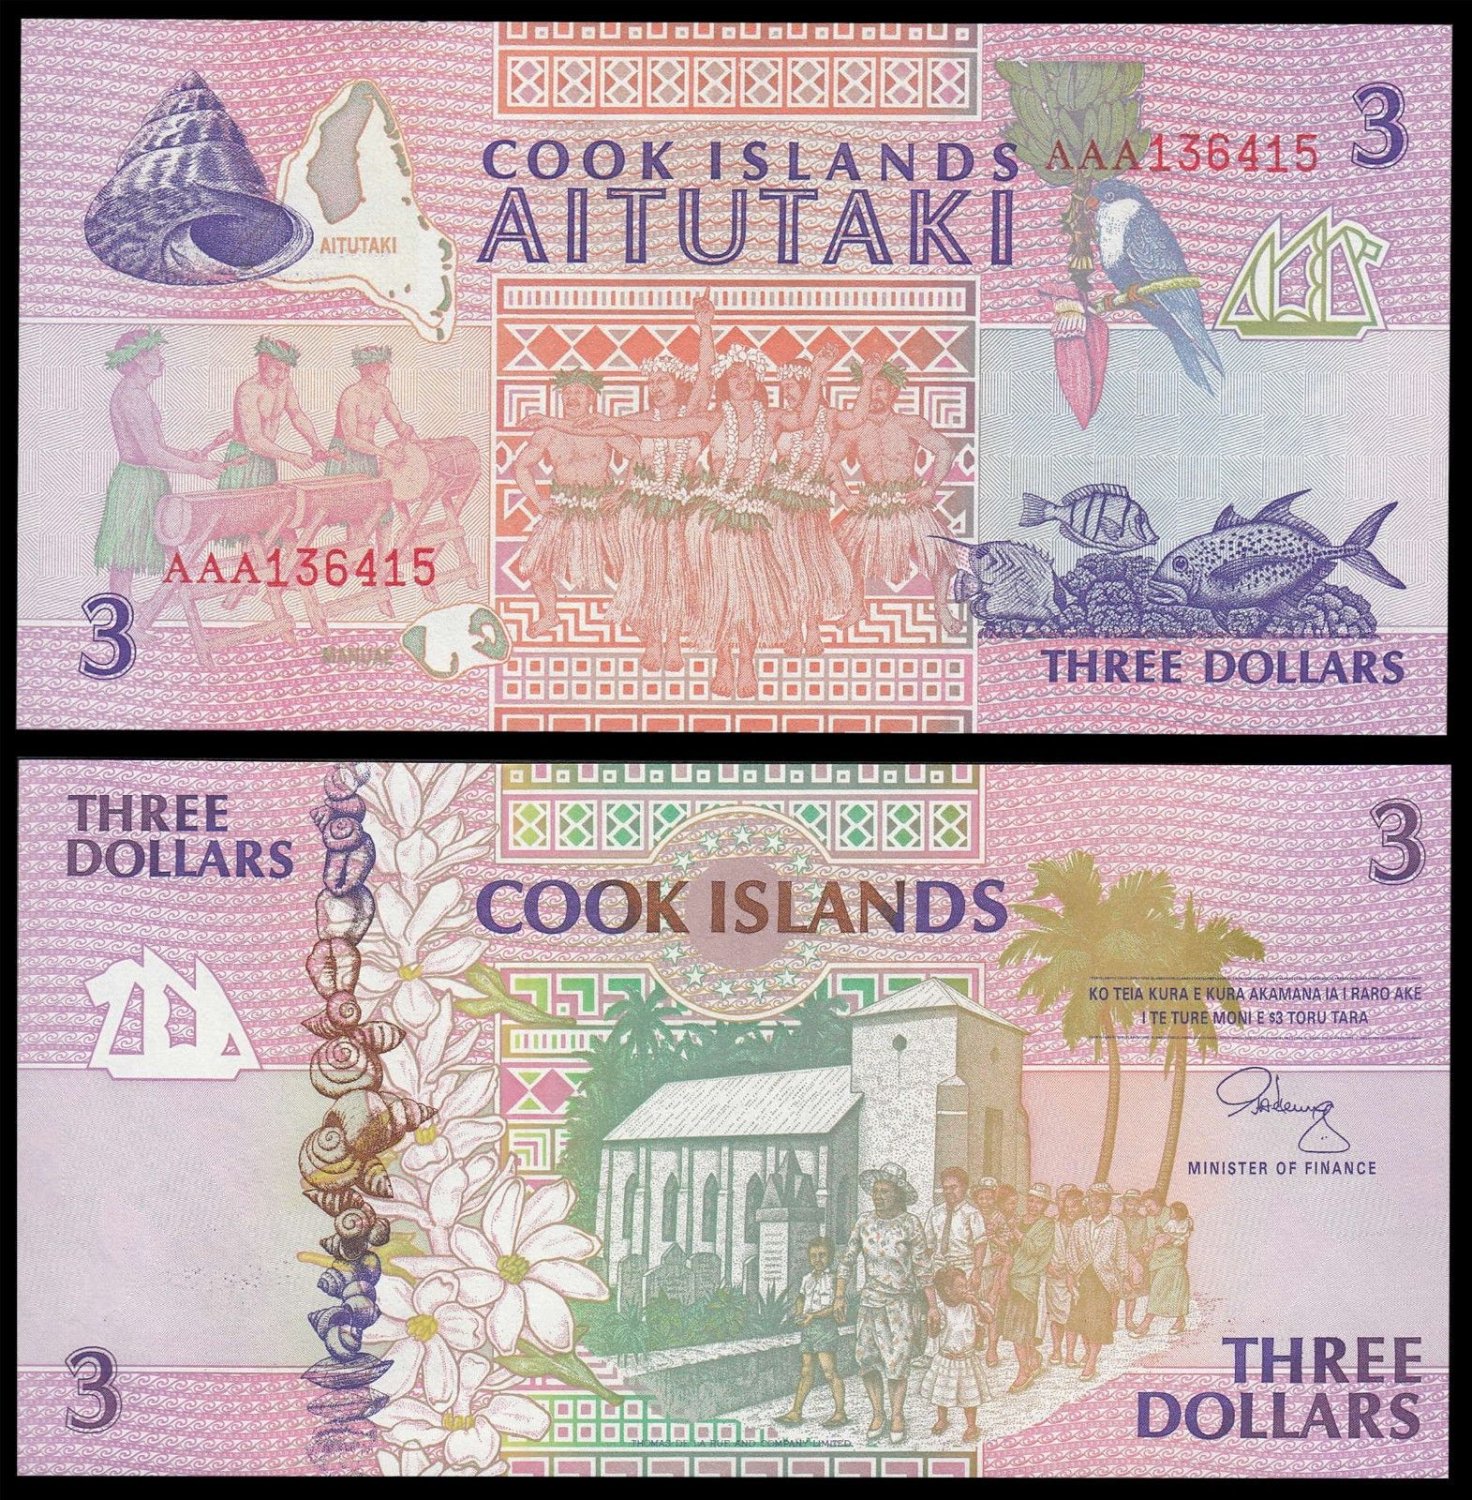 3 доллара в суммах. Банкноты острова Кукка. Банкноты острова Кука. 3 Доллара острова Кука. Купюры острова Кука.